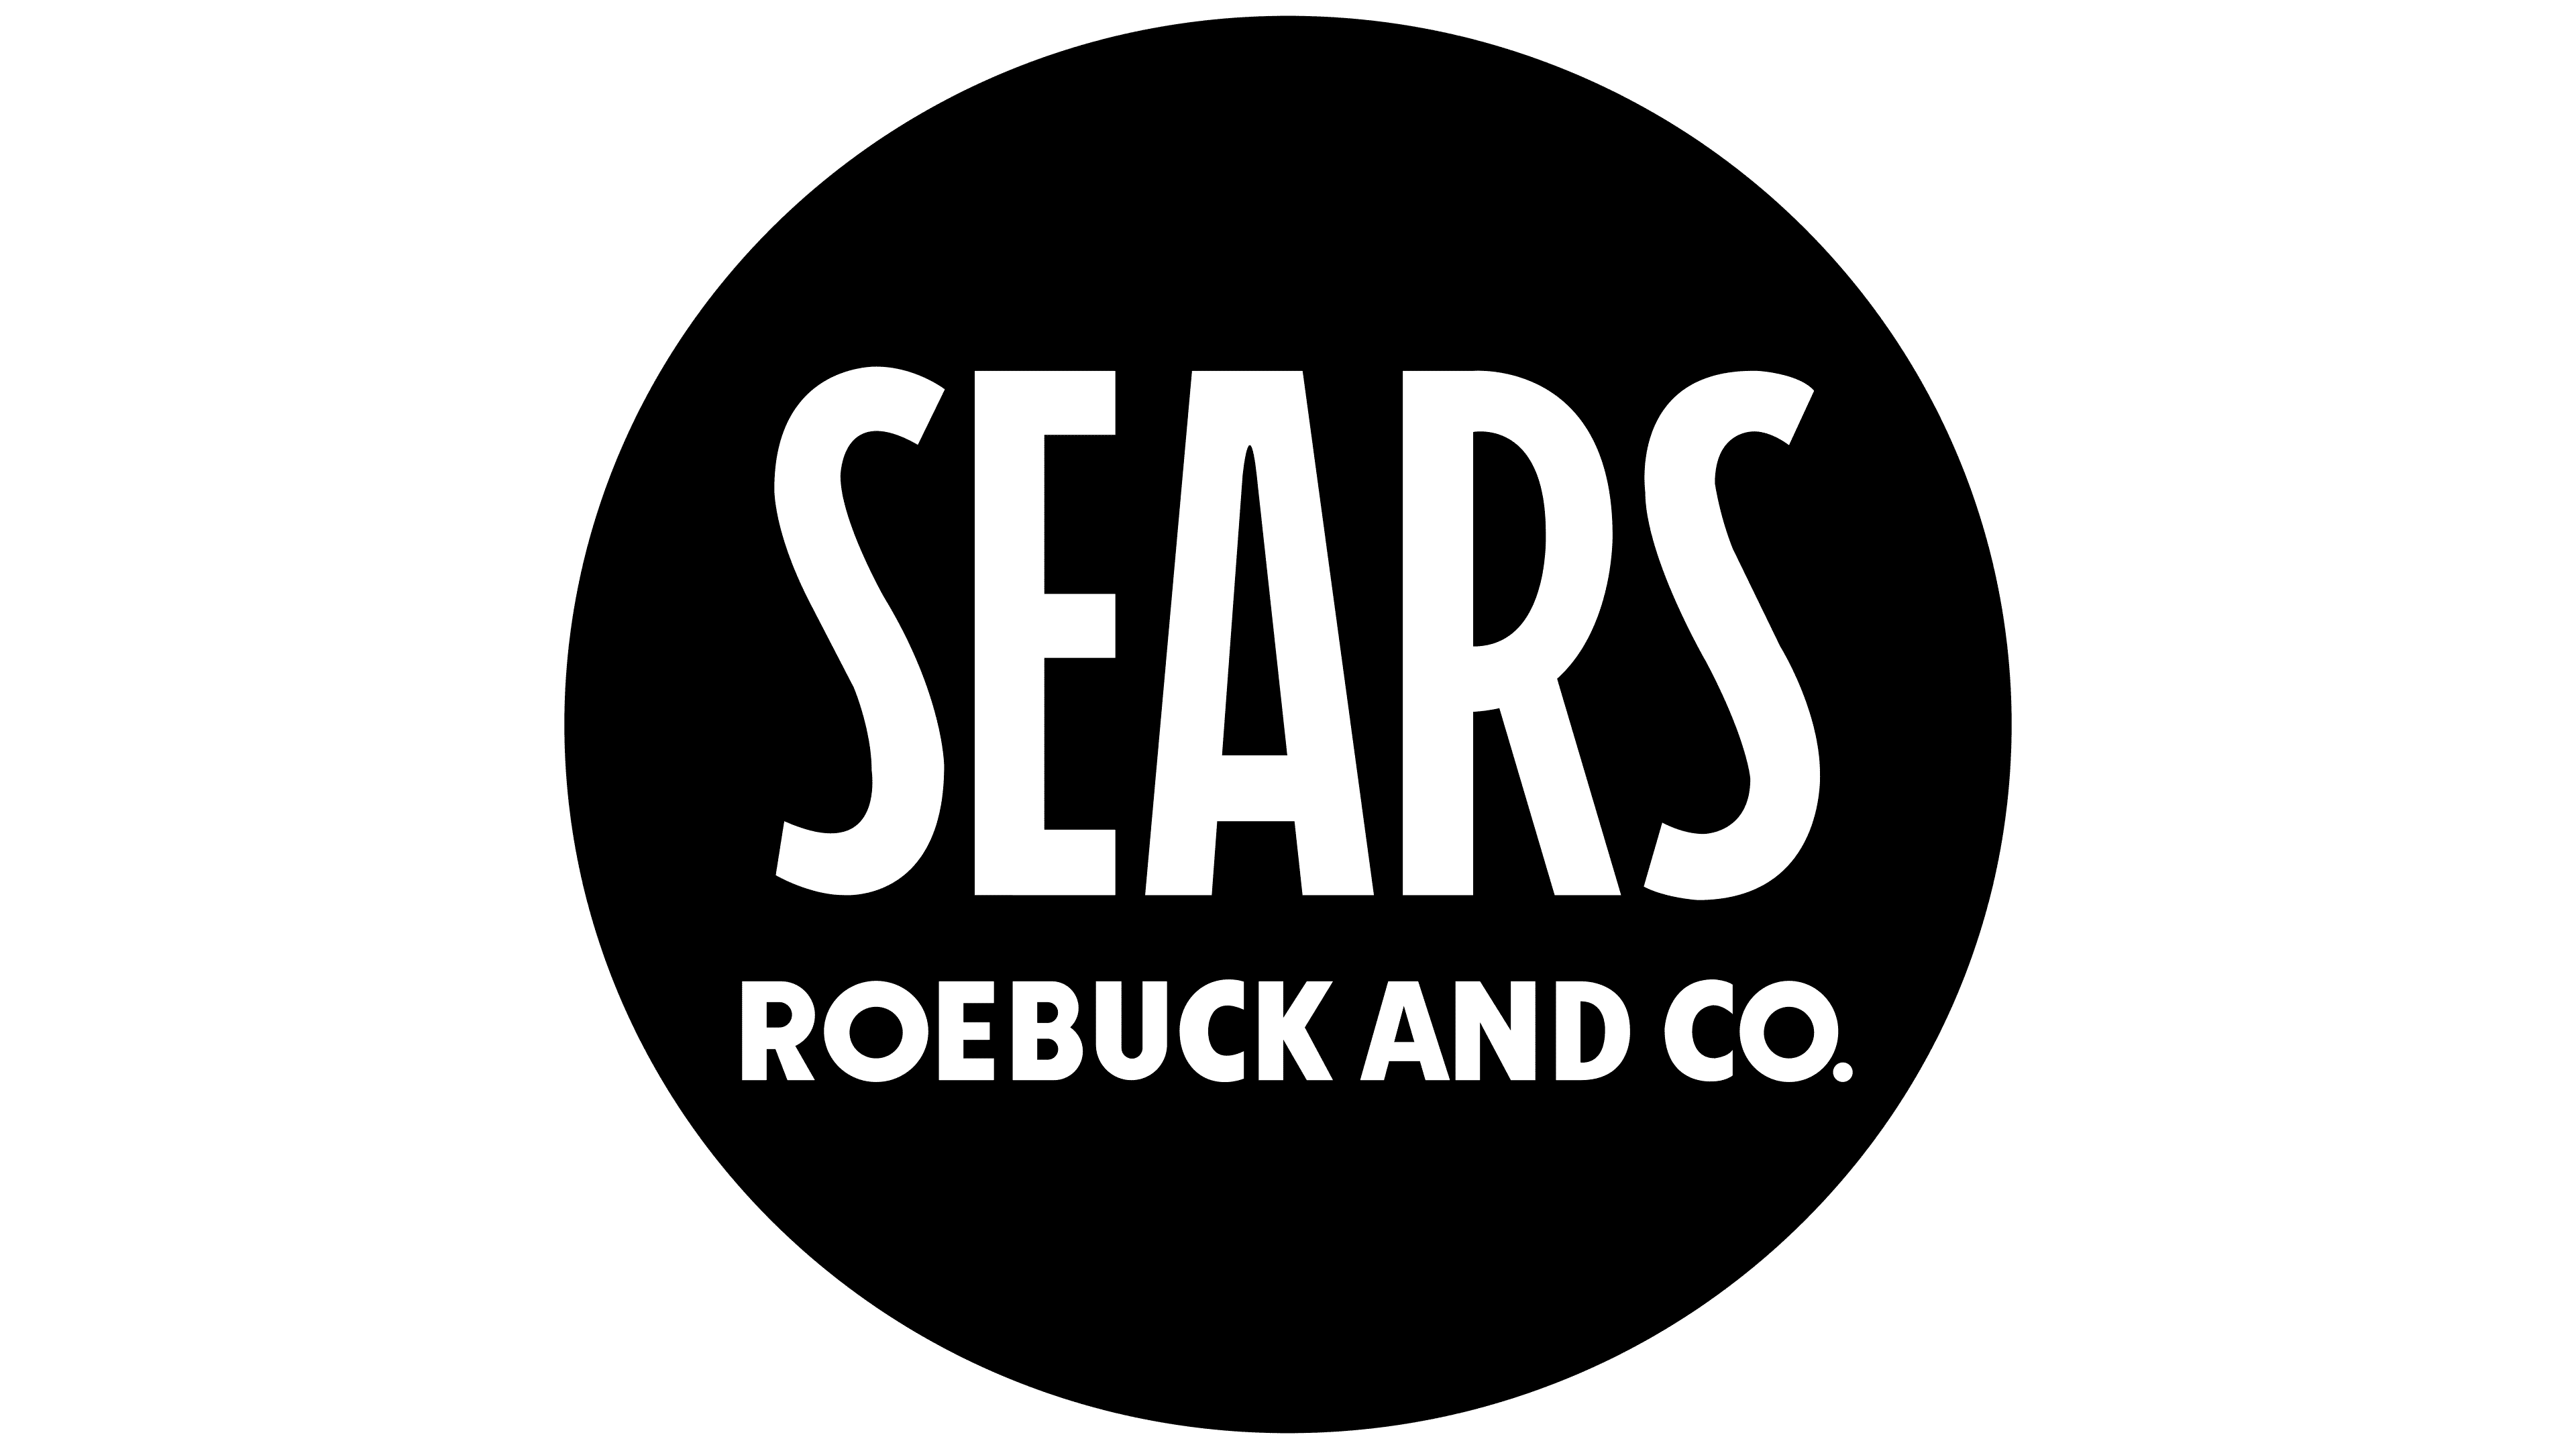 Sears Old Logo Original Size Png Image Pngjoy | Images and Photos finder